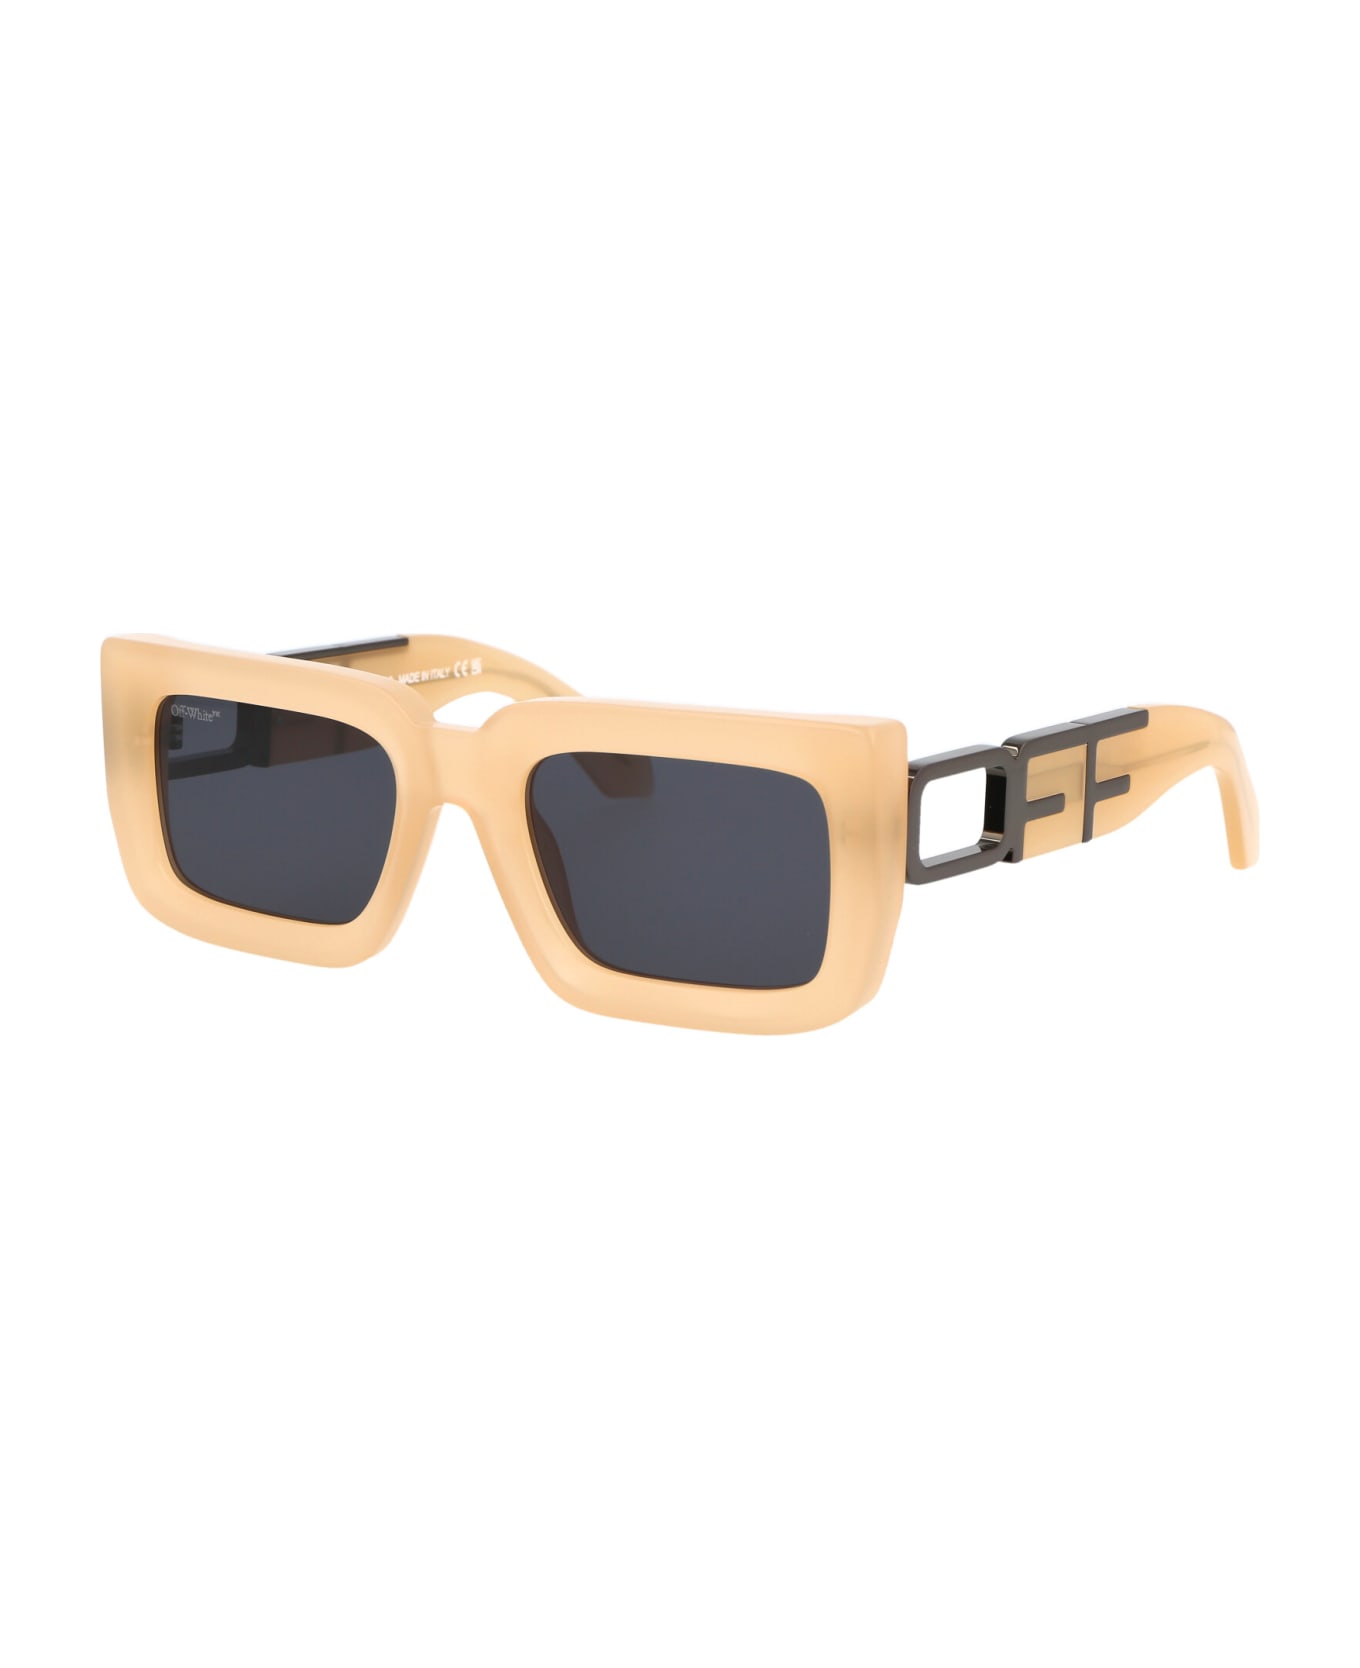 Off-White Boston Sunglasses - 1707 SAND DARK GREY サングラス